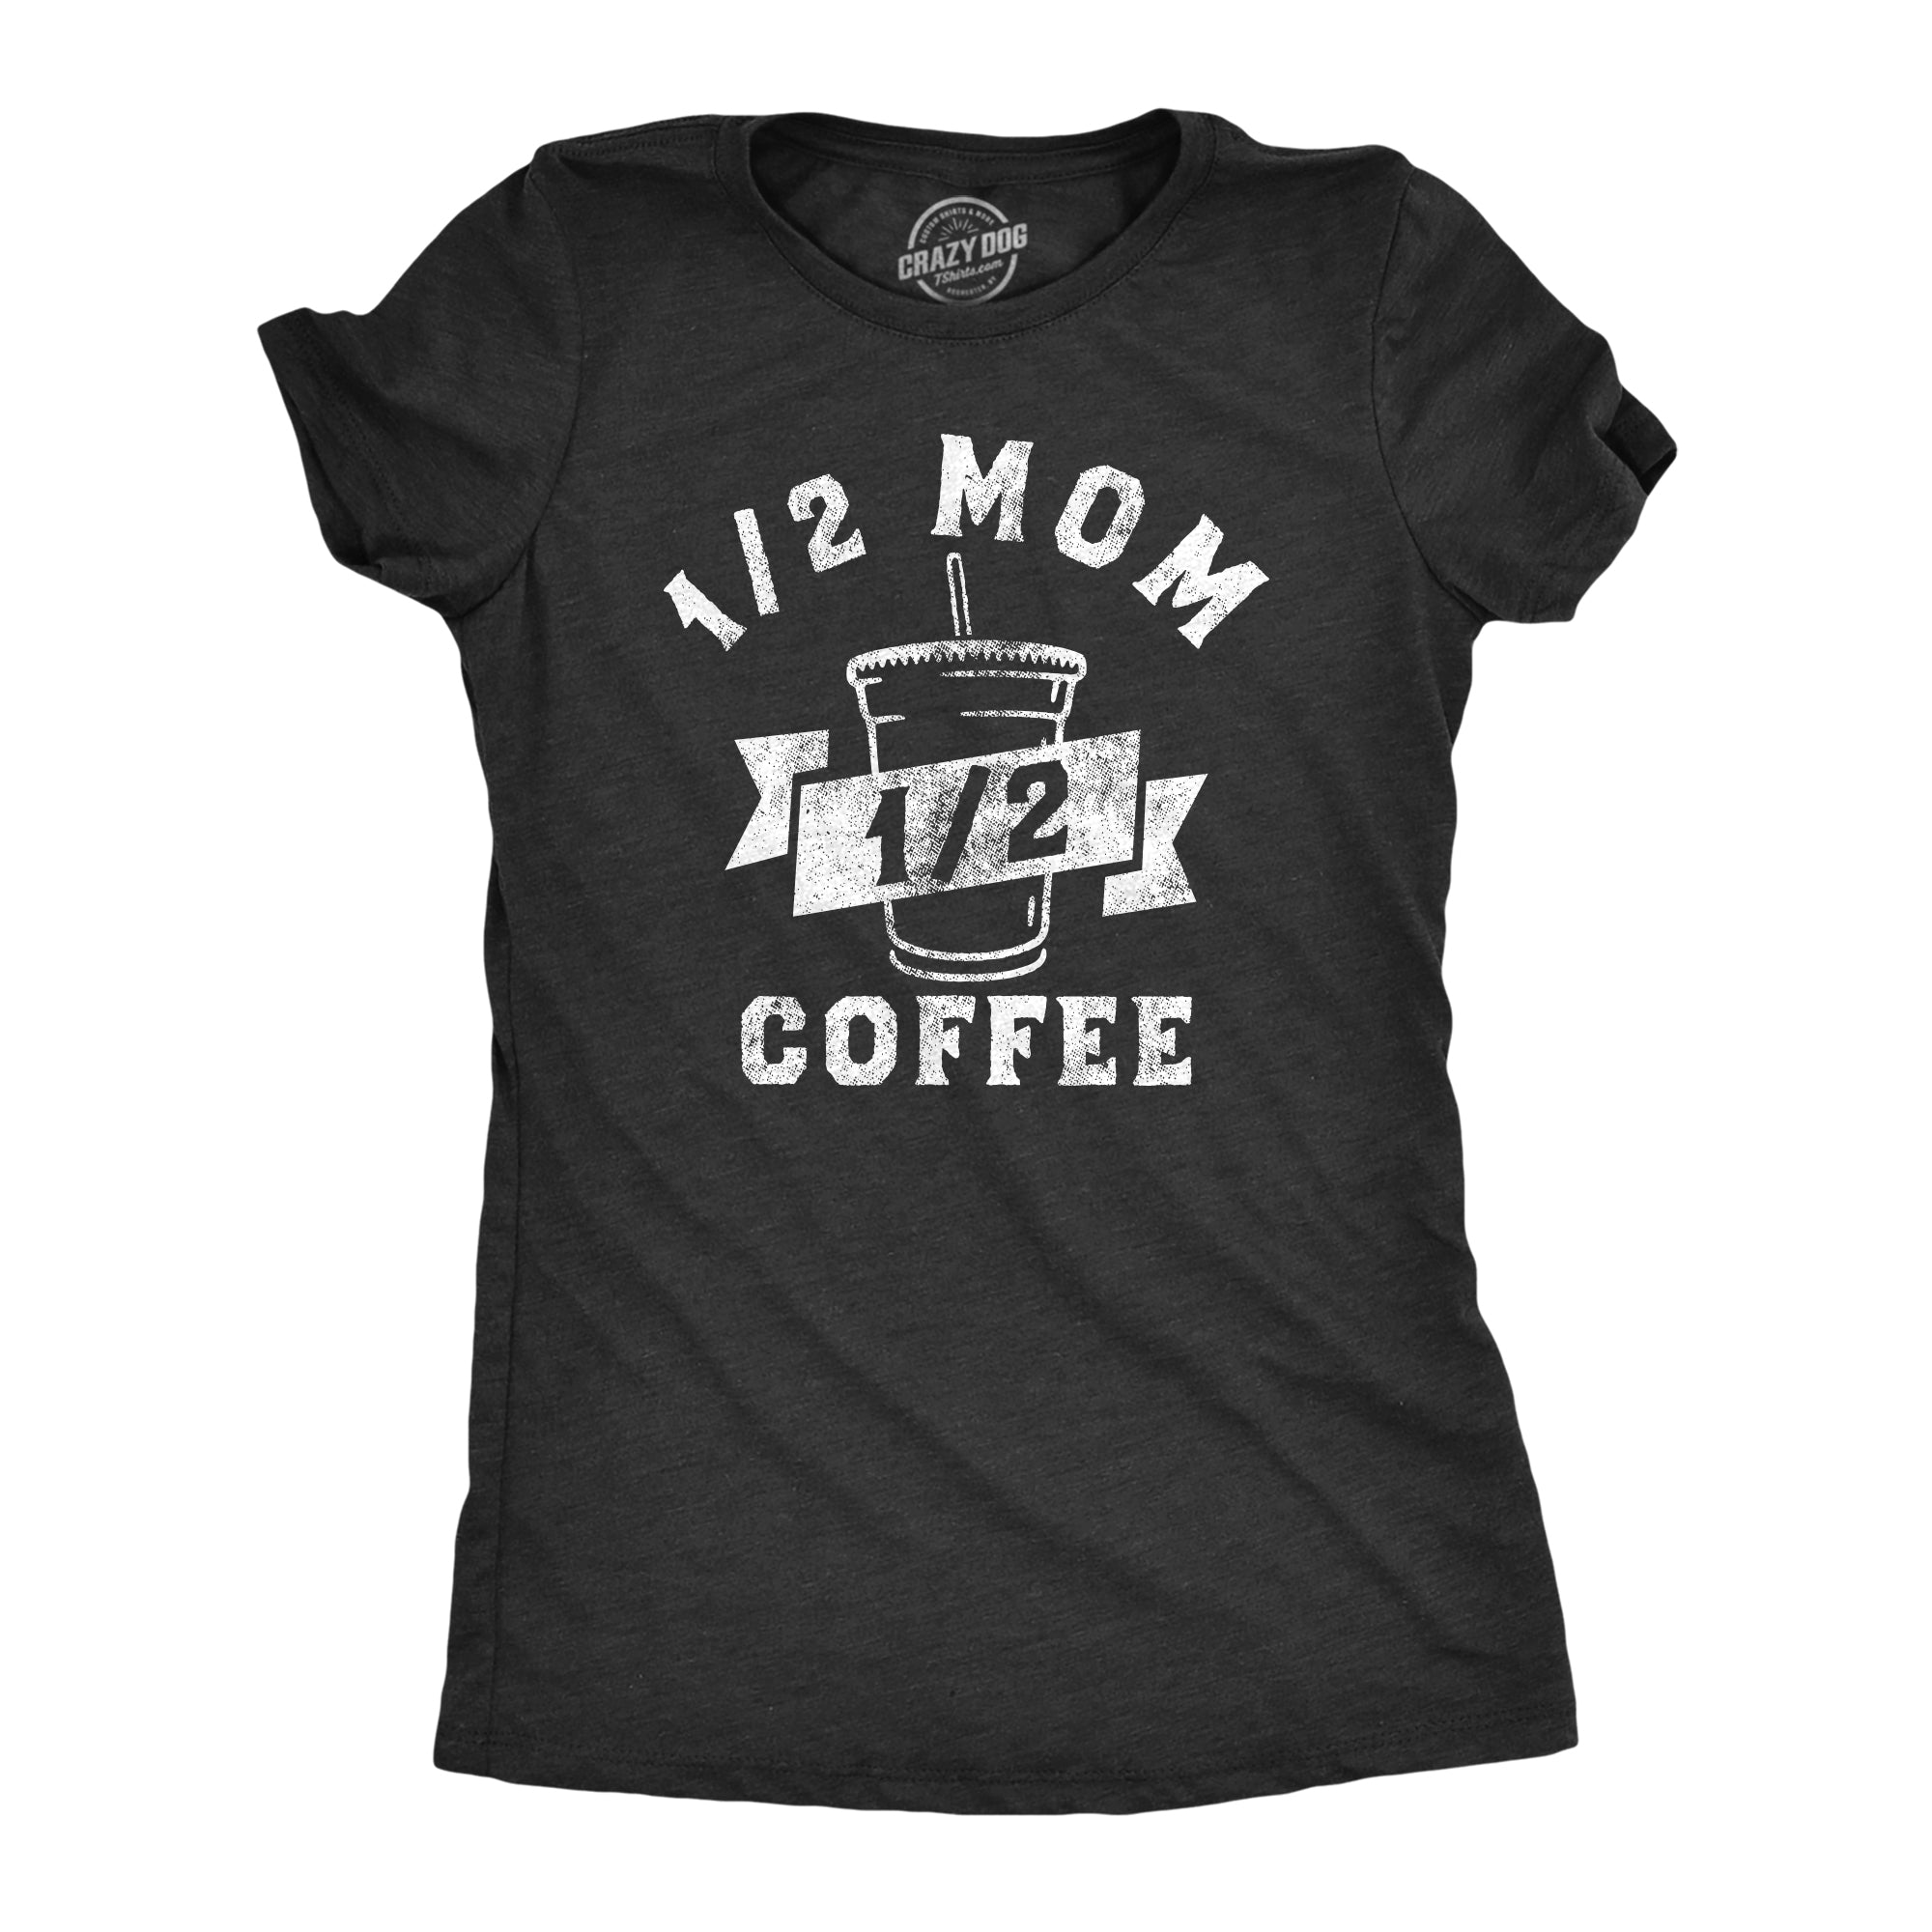 Funny Heather Black - Half Mom One Half Mom One Half Coffee Womens T Shirt Nerdy Mother's Day Coffee Tee